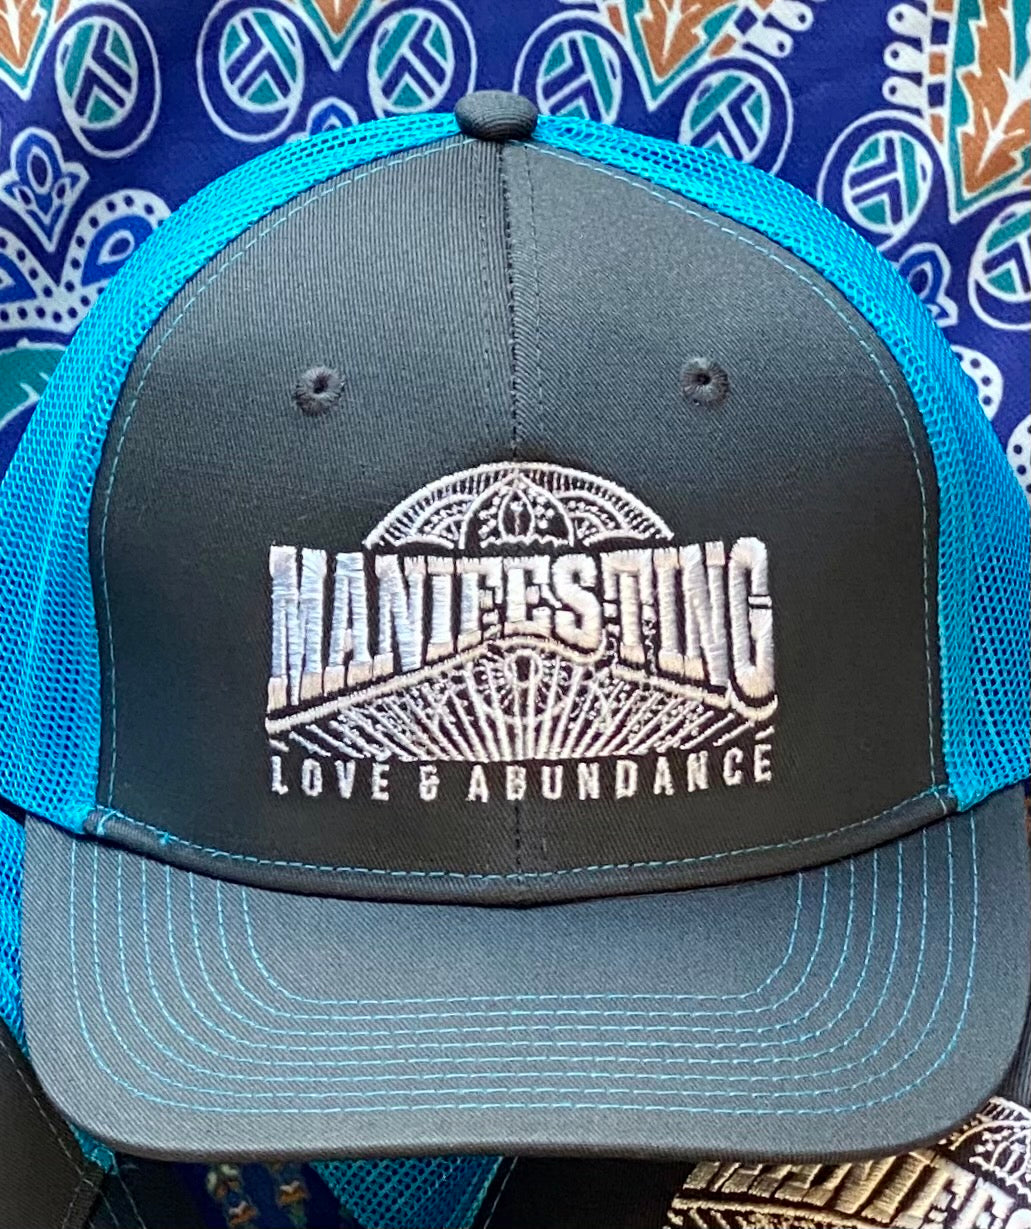 Manifesting Love & Abundance, Hat